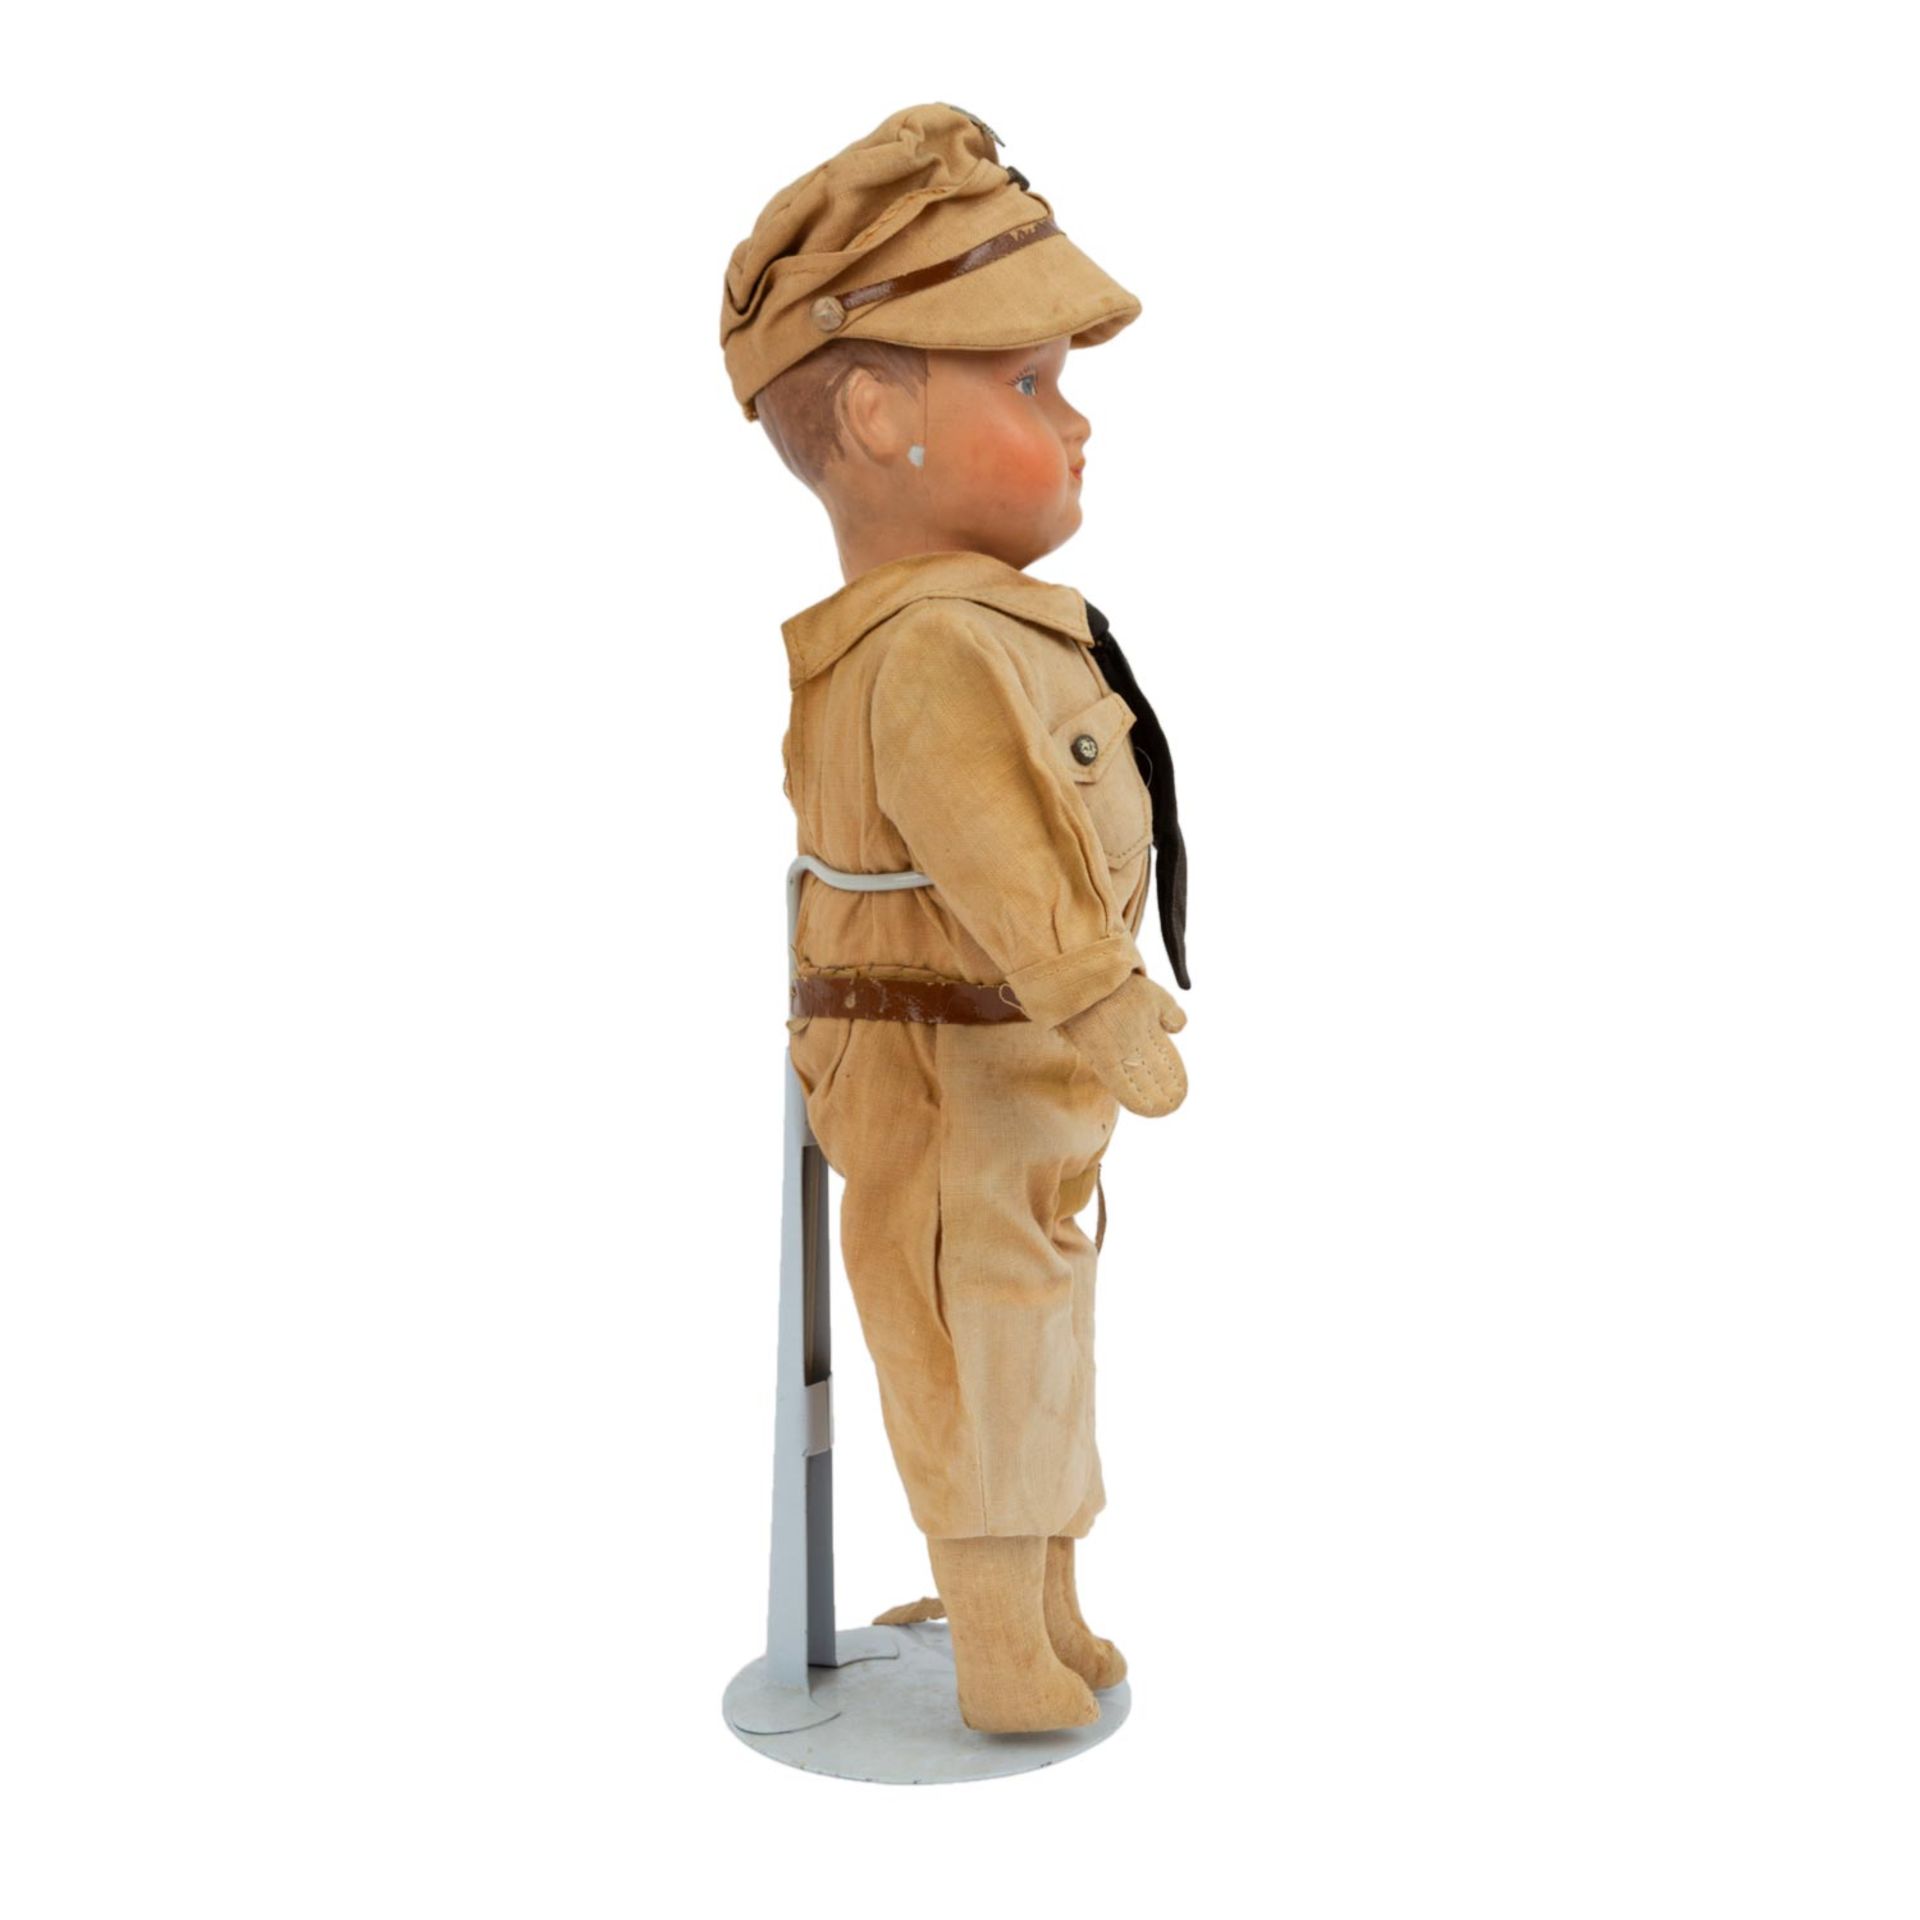 Seltene Celluloid-Puppe in HJ-Uniform, 1930er Jahre, - Image 5 of 11